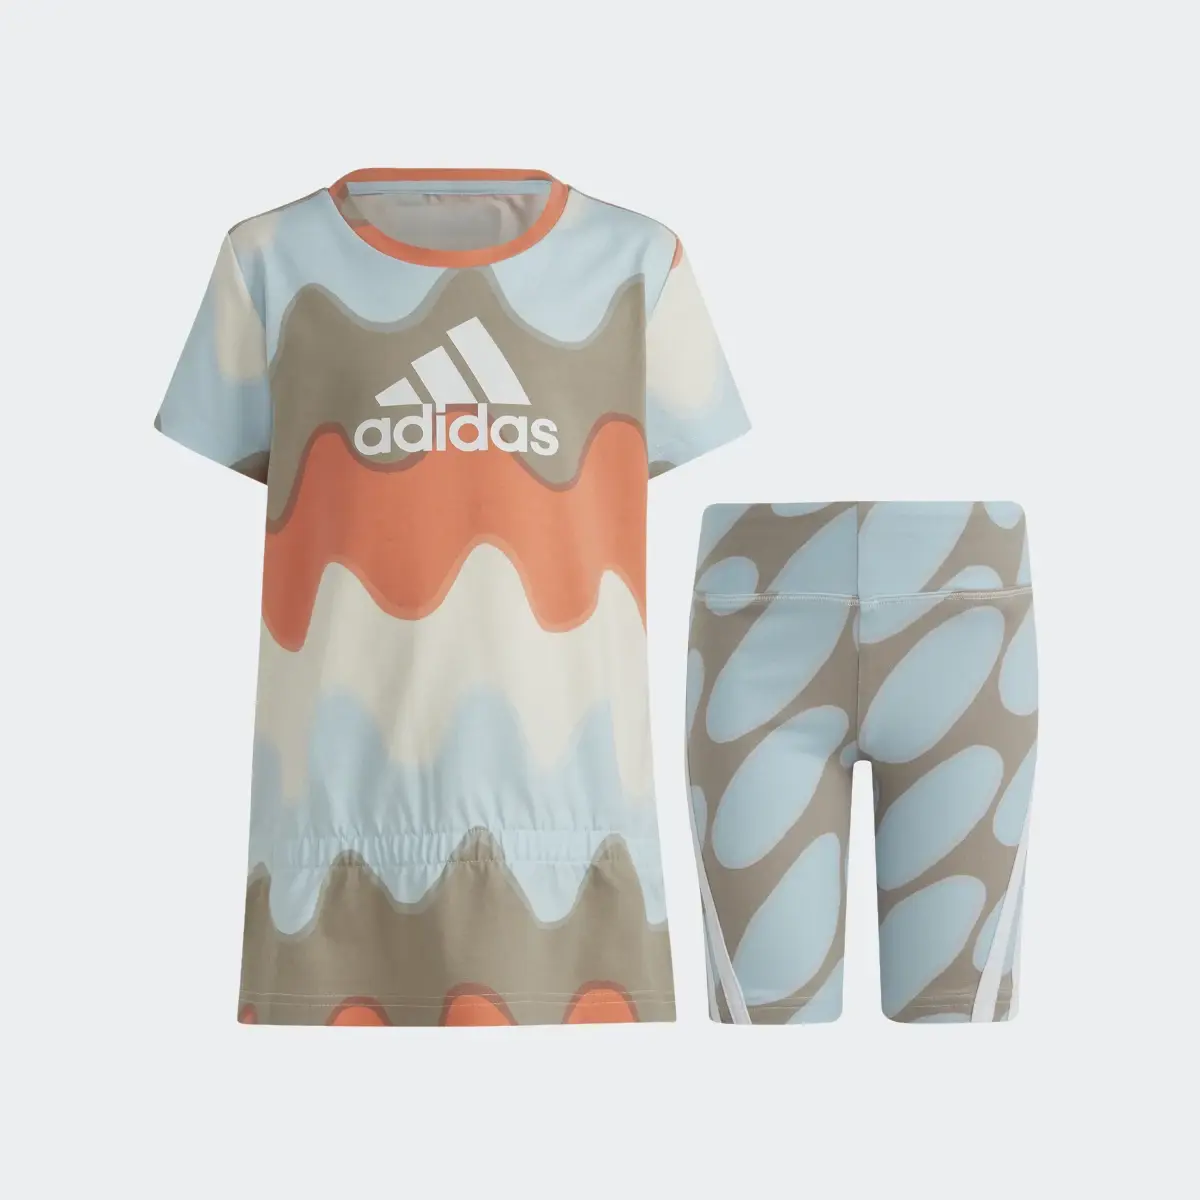 Adidas Marimekko Allover Print Cotton Set. 1